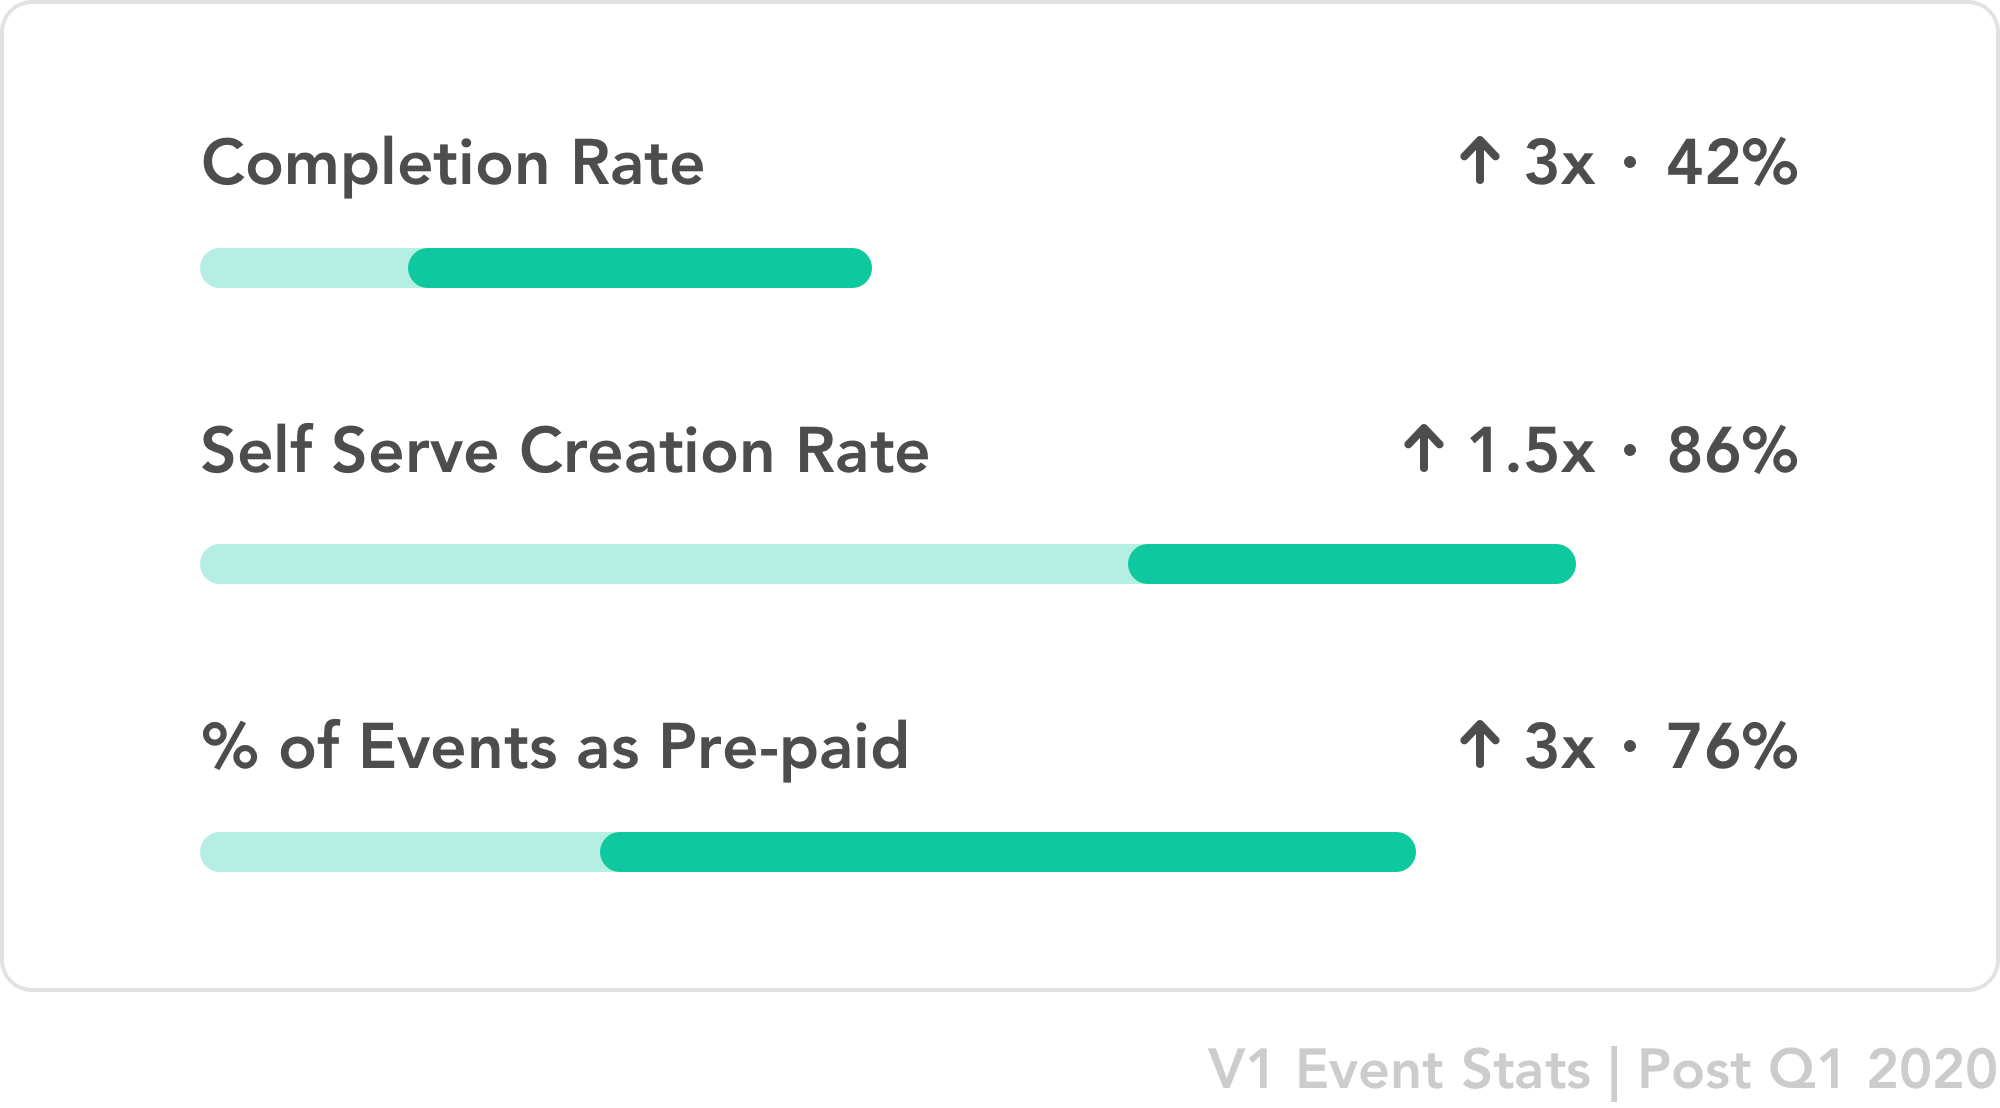 V1 Event Stats